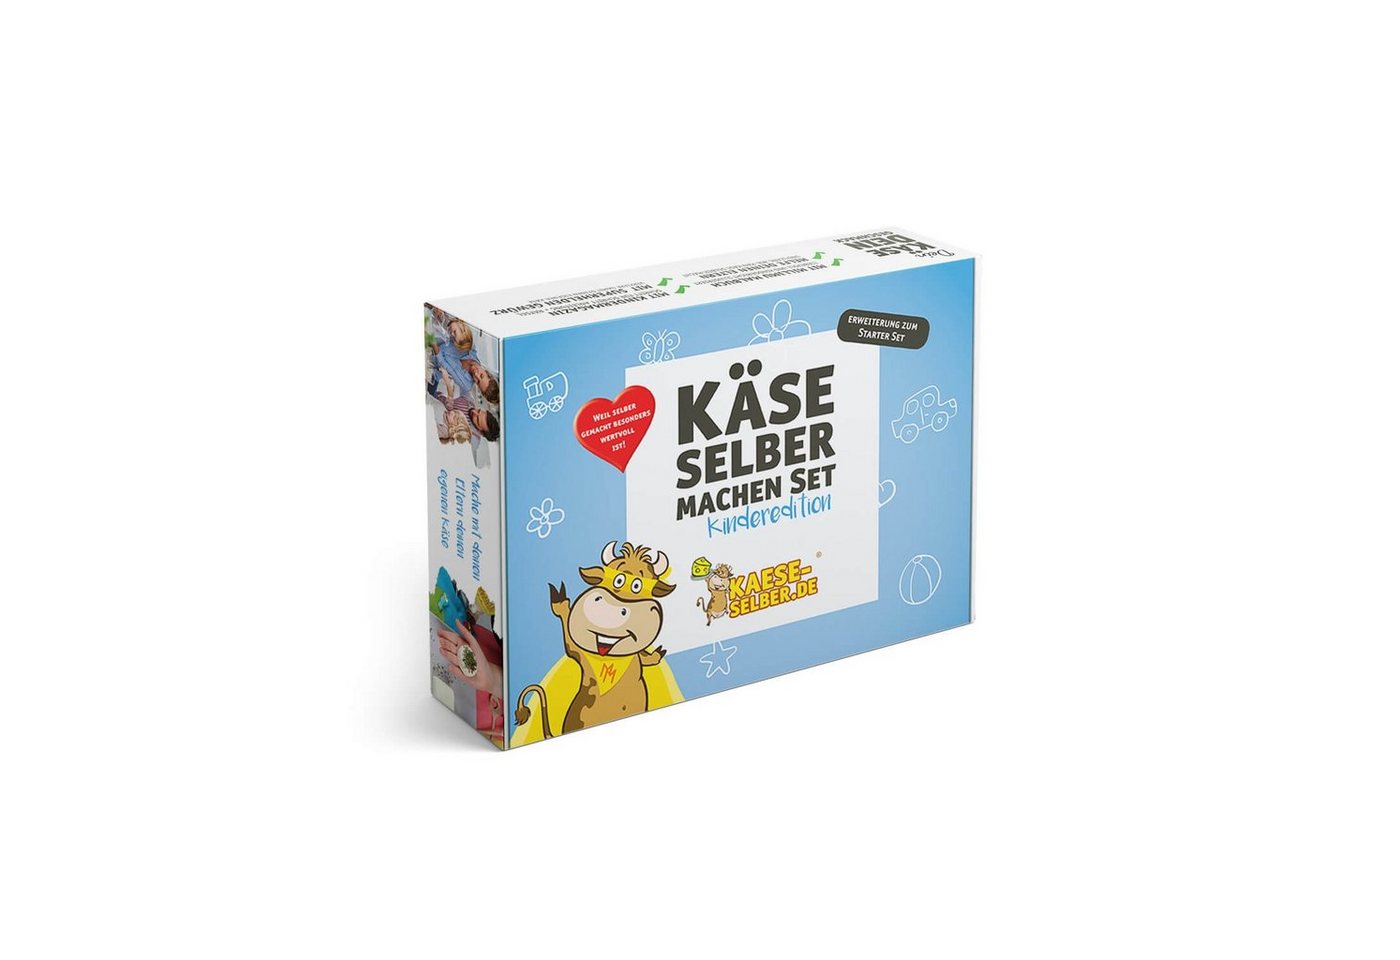 KAESE-SELBER.DE Back-Set Käse selber machen Set Käseset für Kinder Geschenkidee - Kinderedition von KAESE-SELBER.DE